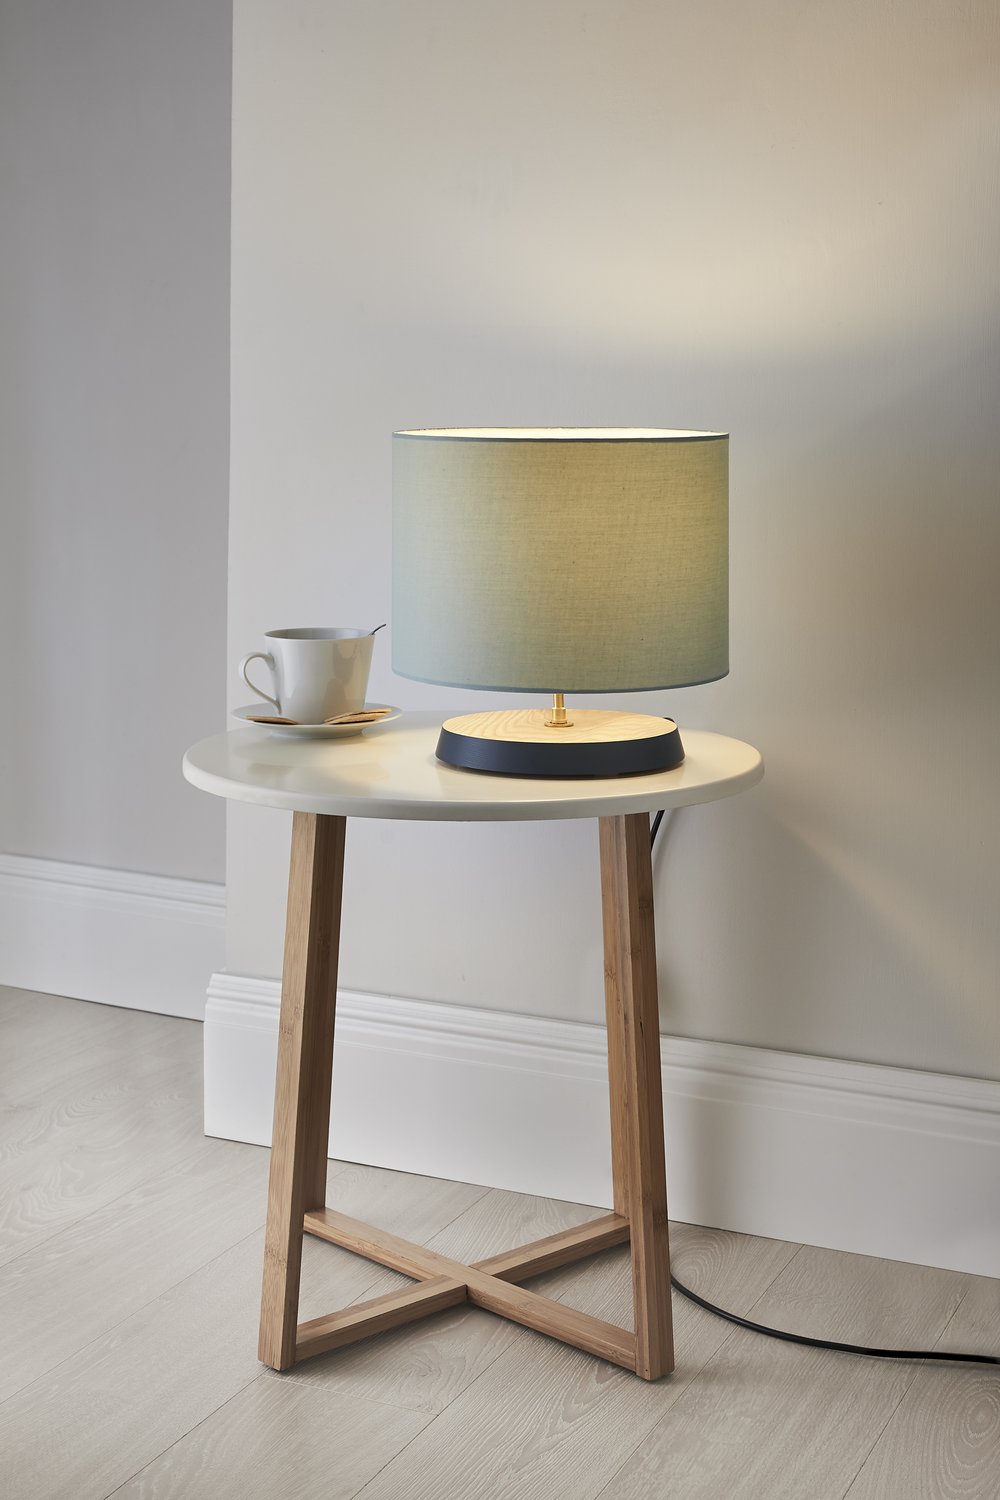  Image of lit handmade table lamp photographed upon modern side table  